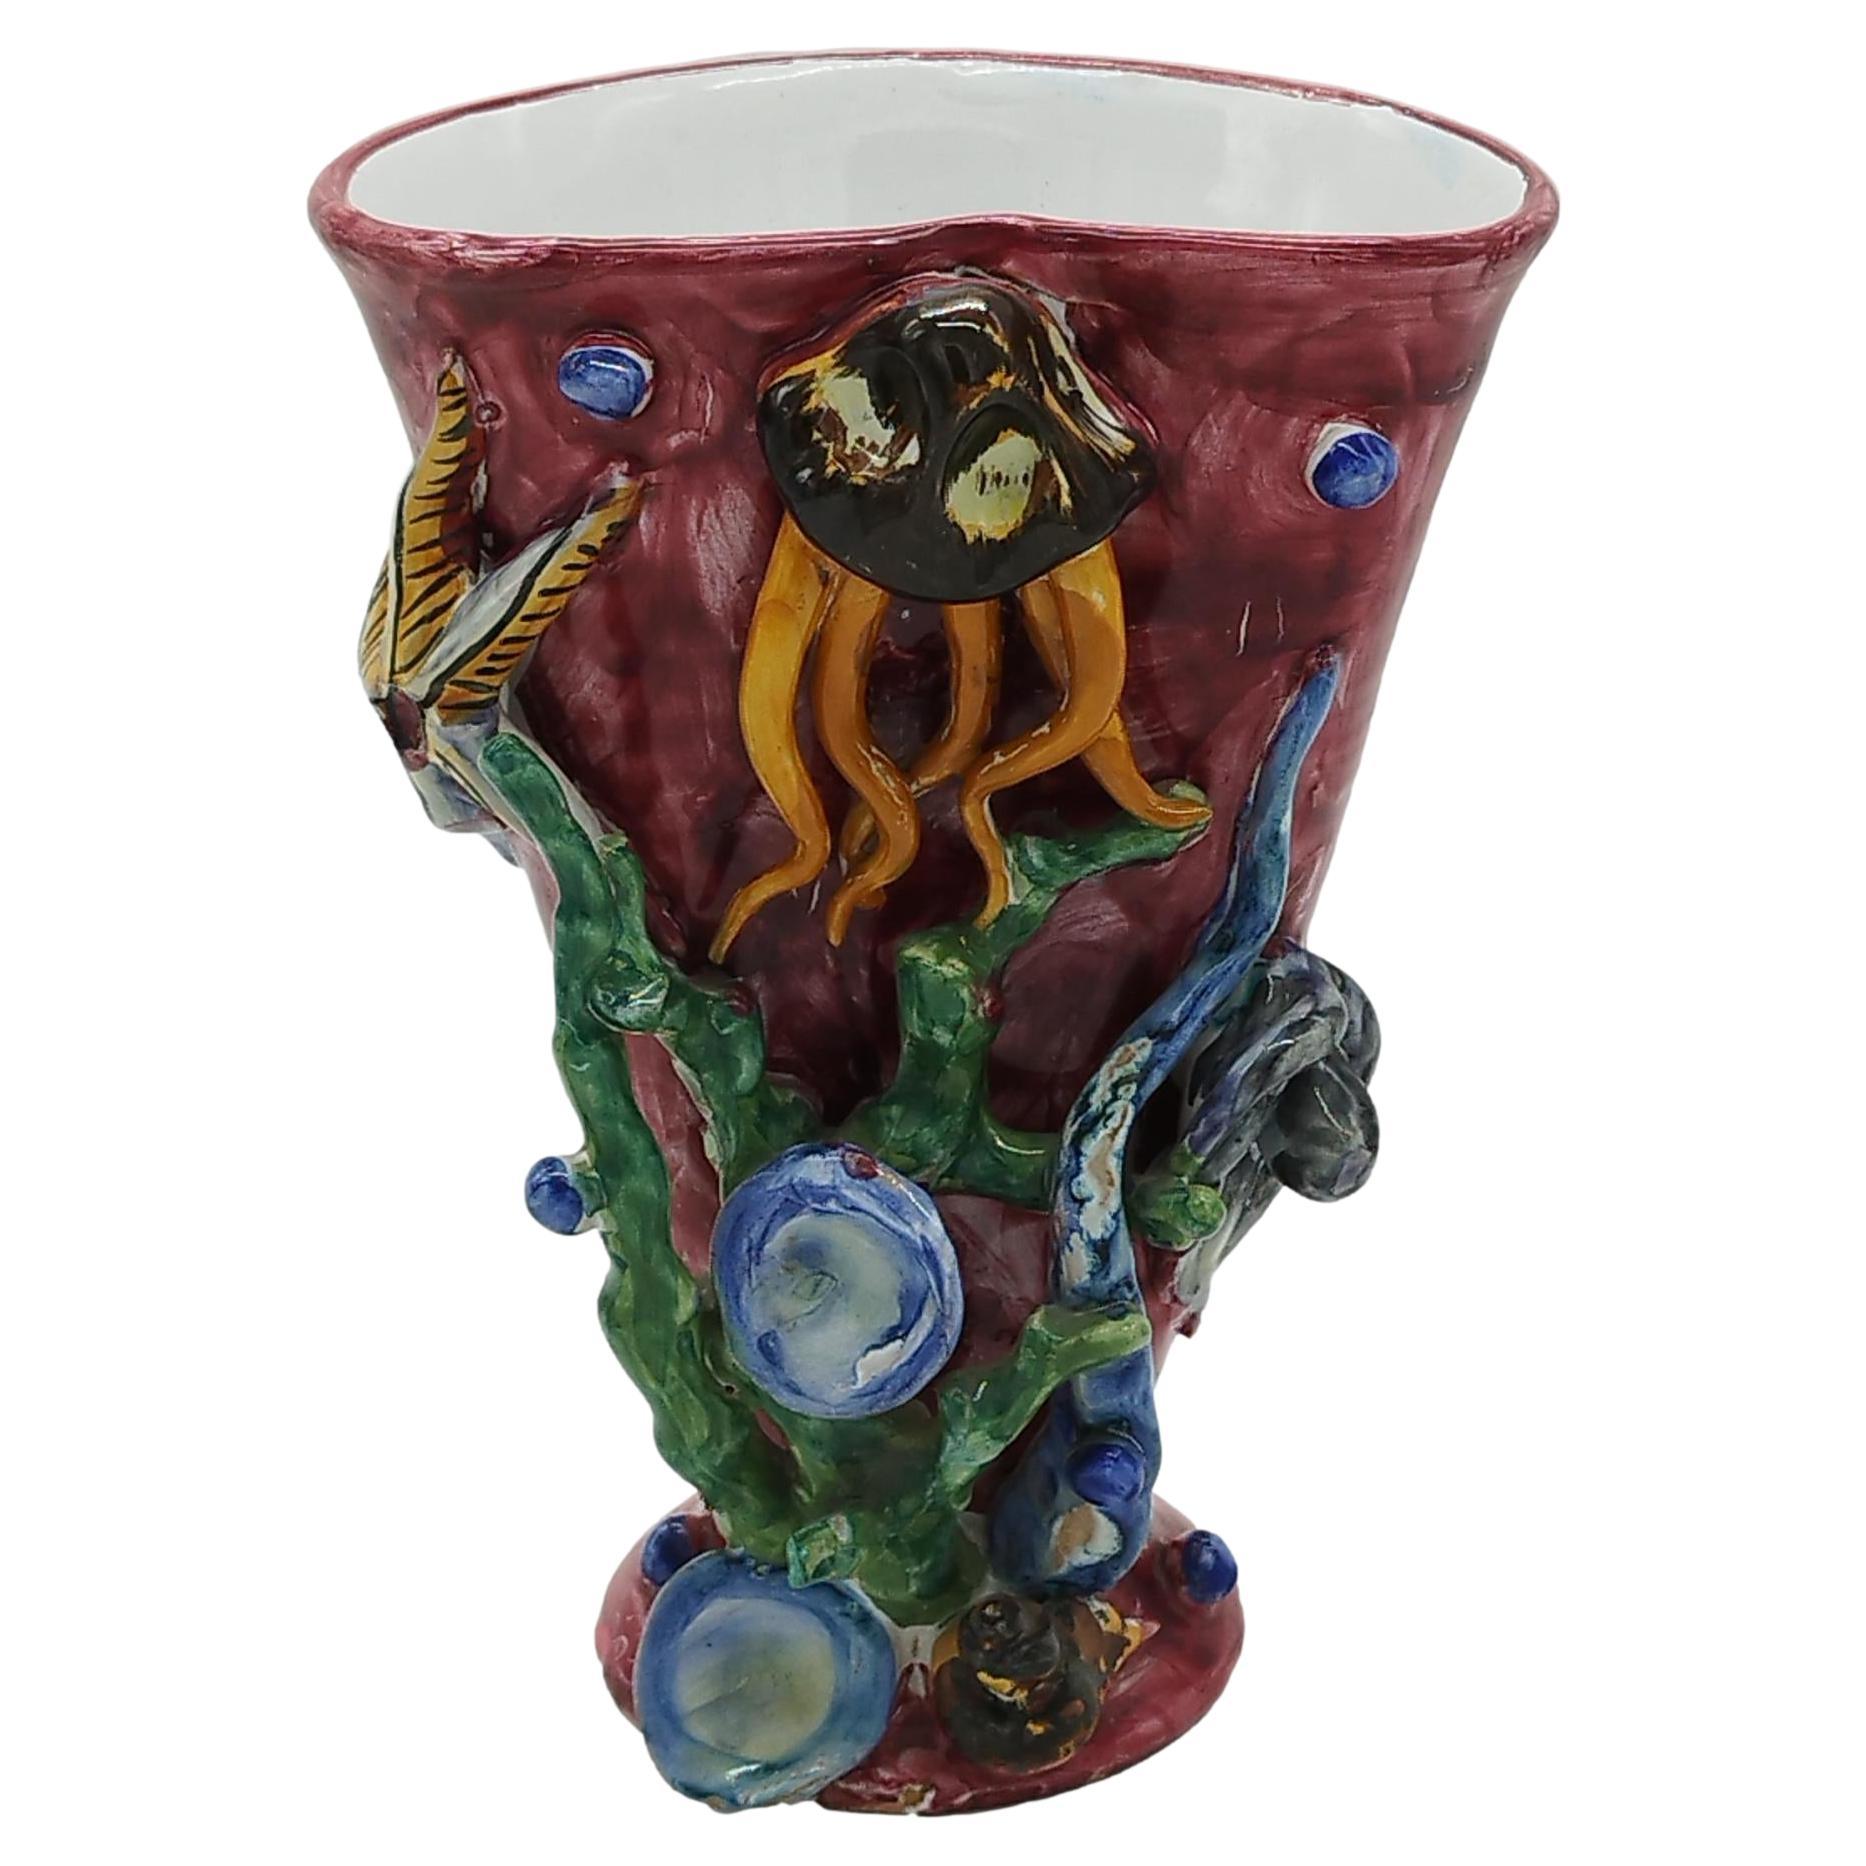 Vietri Ceramic Vase, B. Pinto Signed, Italy, 1970s